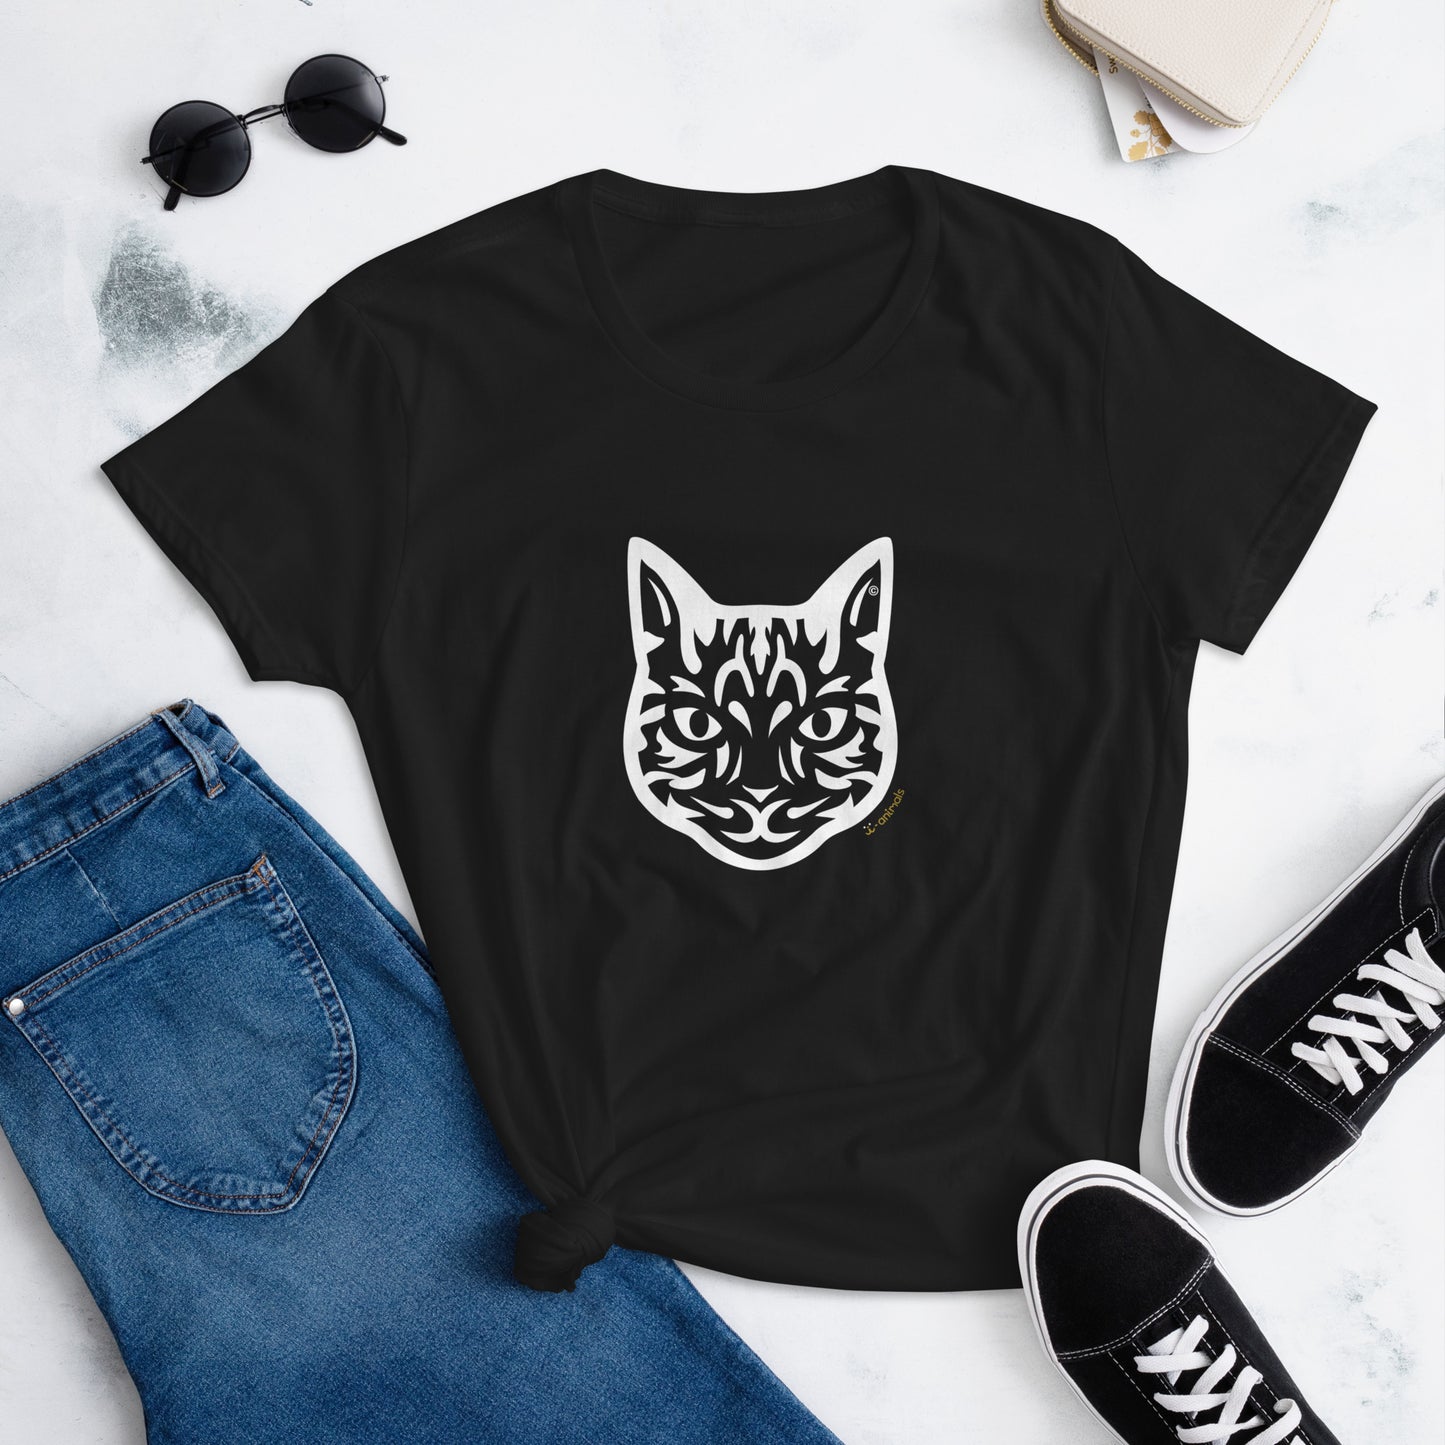 Women's Fashion Fit T-Shirt - Tabby Cat -Tribal